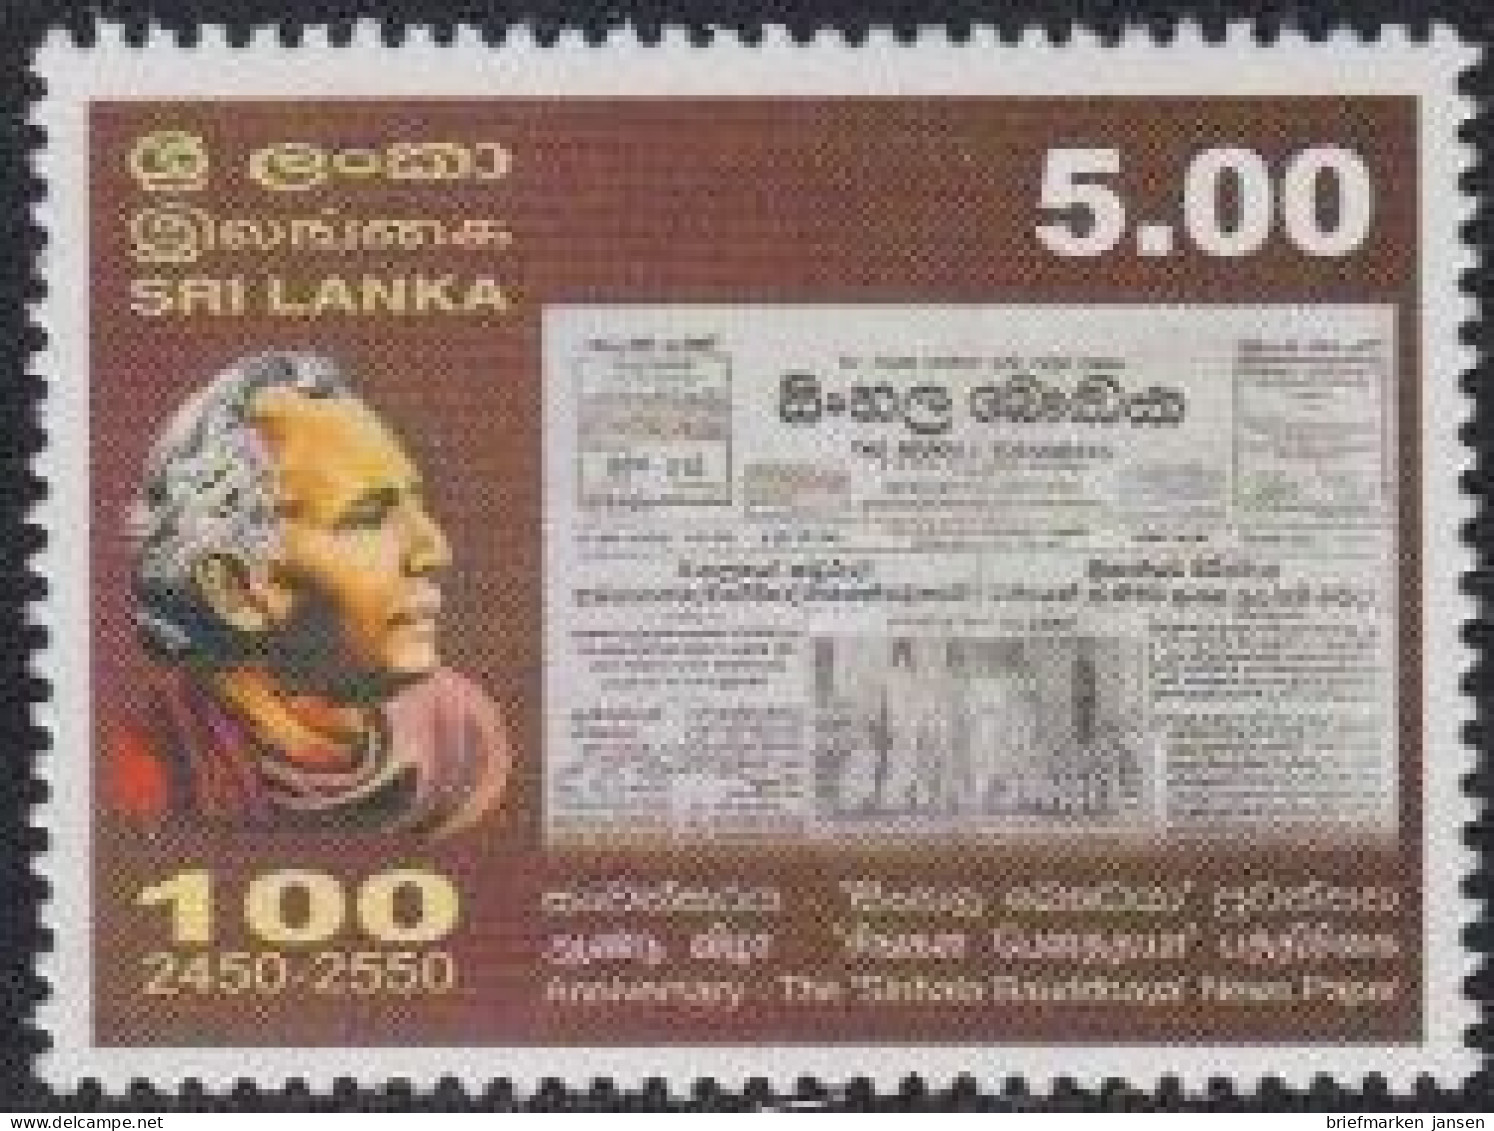 Sri Lanka Mi.Nr. 1579 100J. Zeitung Sinhala Bauddhaya, Titelblatt (5,00) - Sri Lanka (Ceylon) (1948-...)